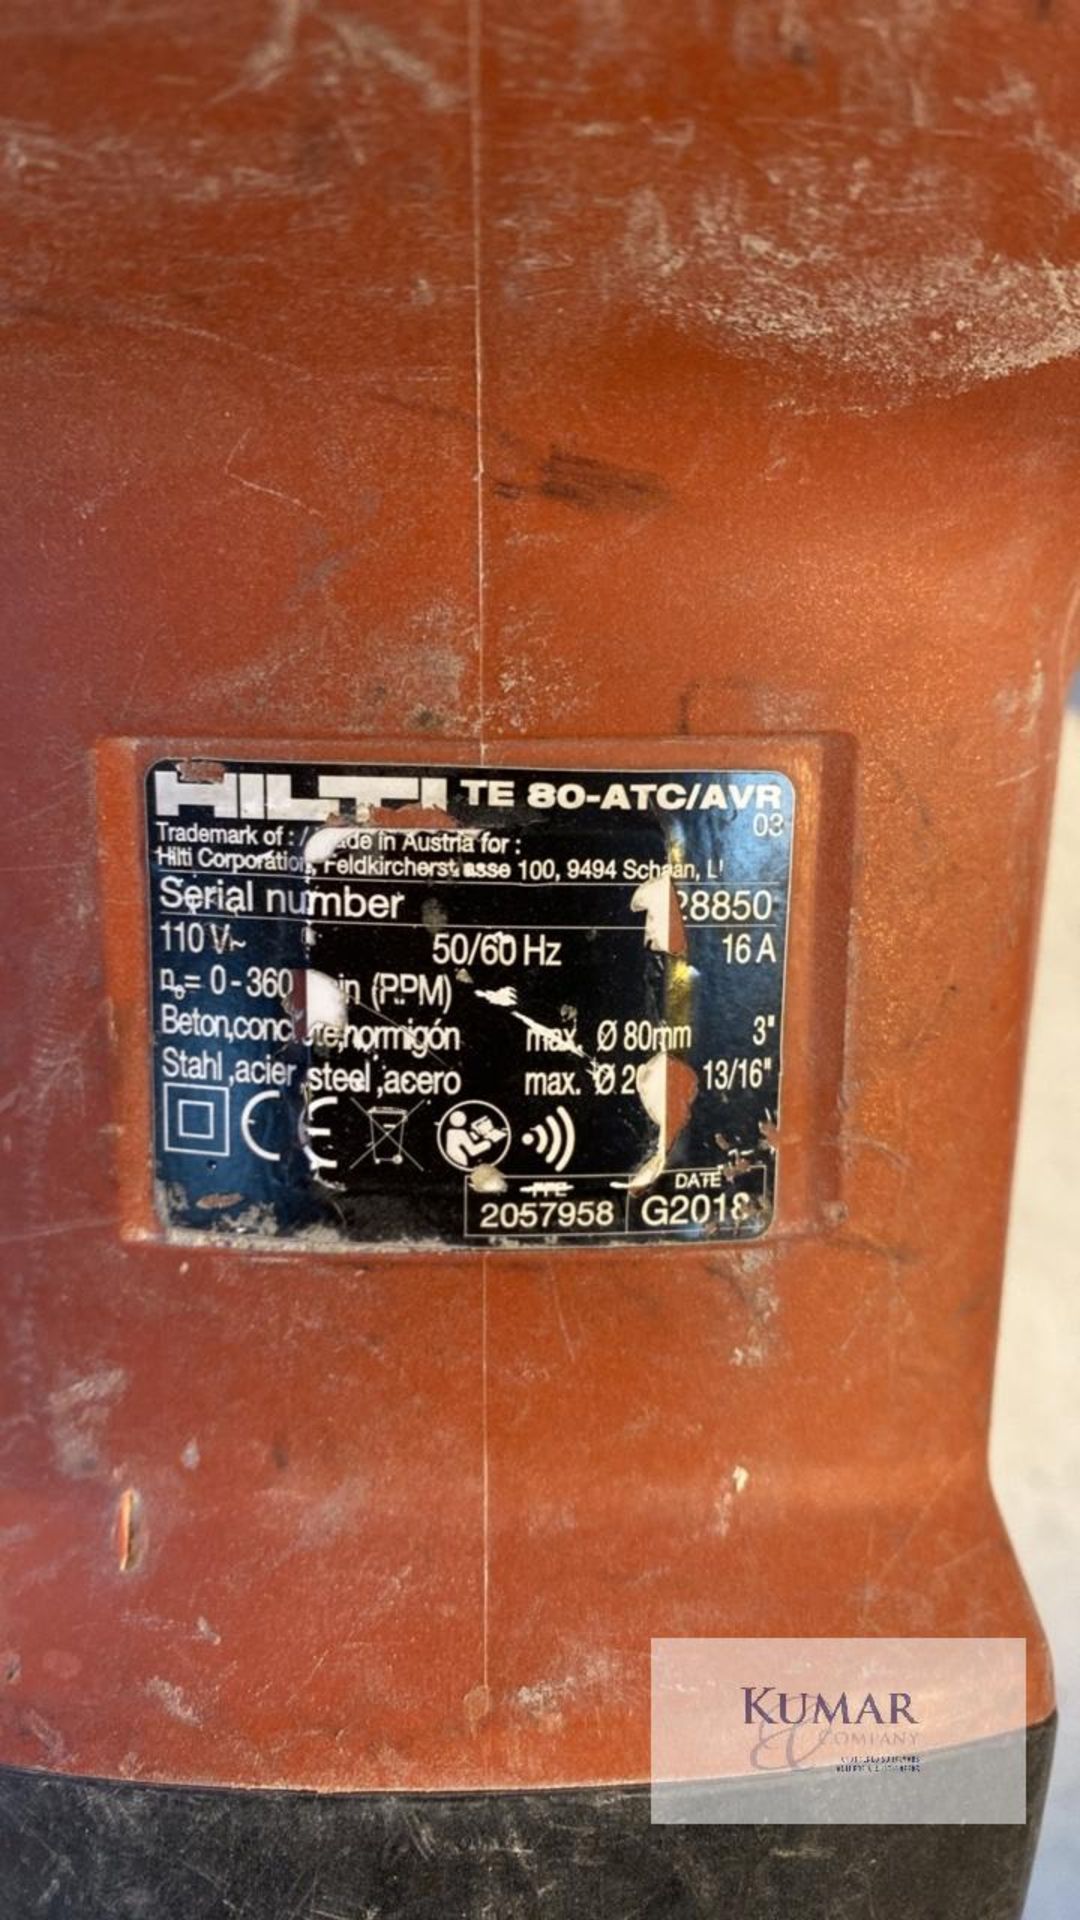 Hilti TE 80 - ATC AVR 110 Volt SDS Rotary Hammer Drill, Serial No. 2057958 (G2018) - Image 3 of 4